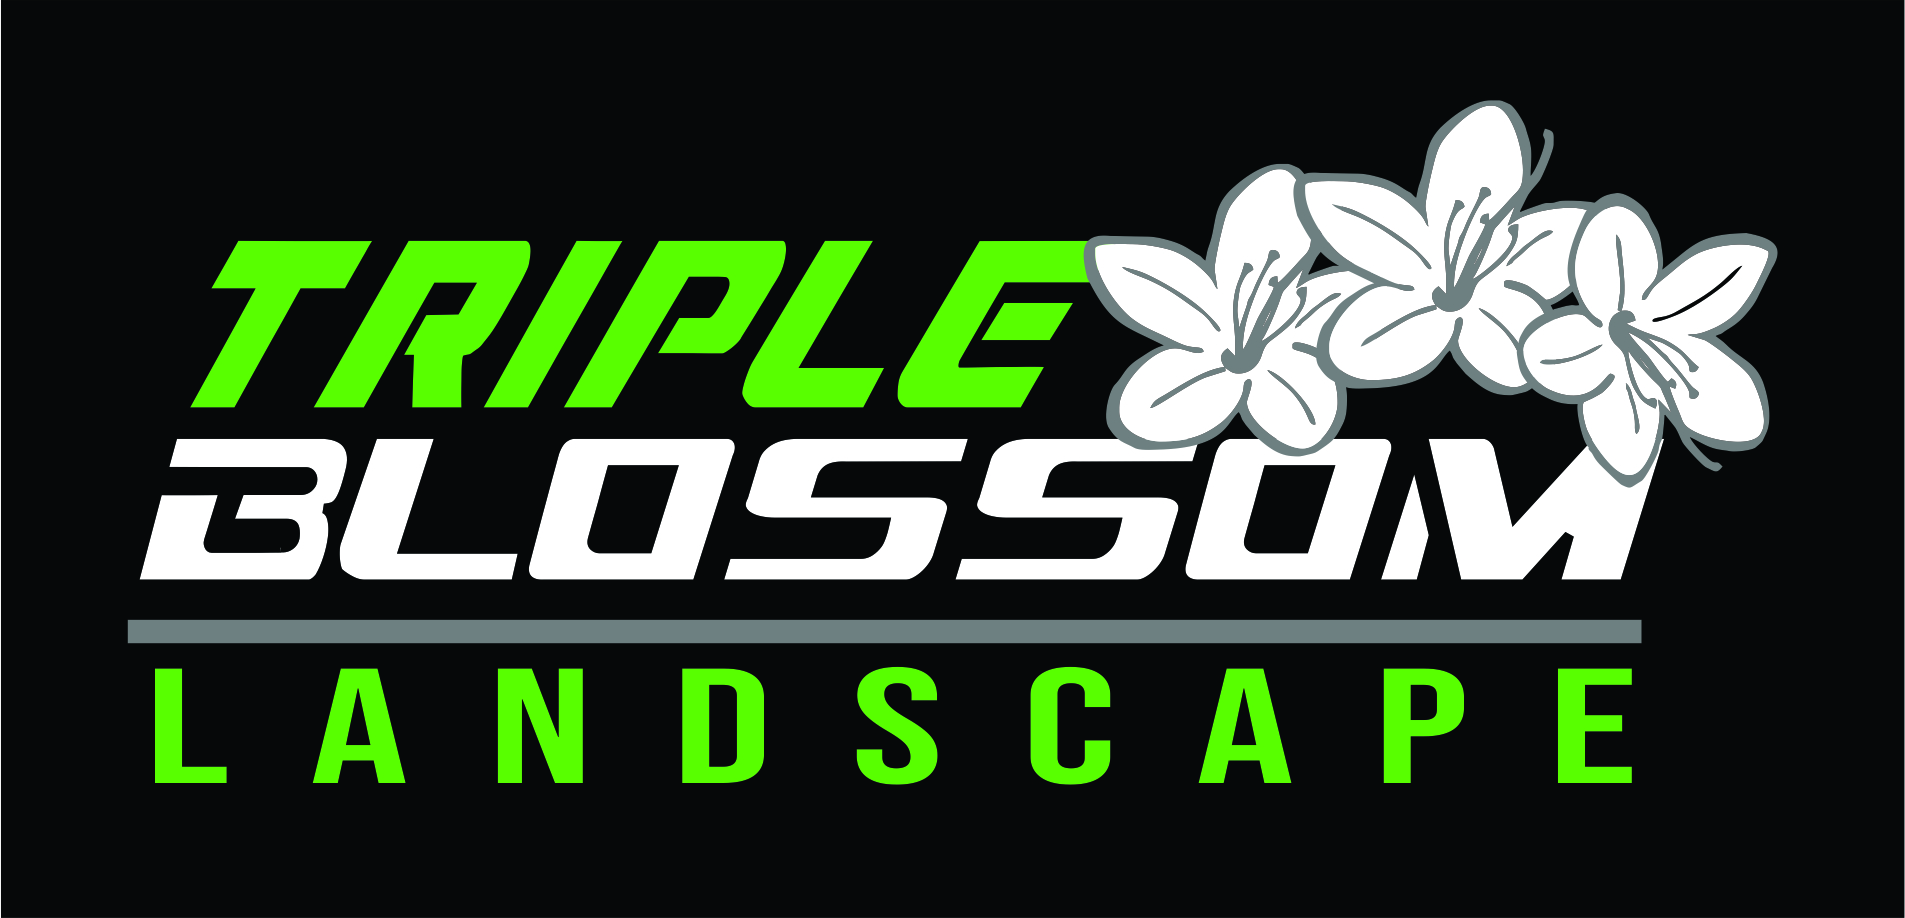 Triple Blossom Irrigation and Lighting Logo